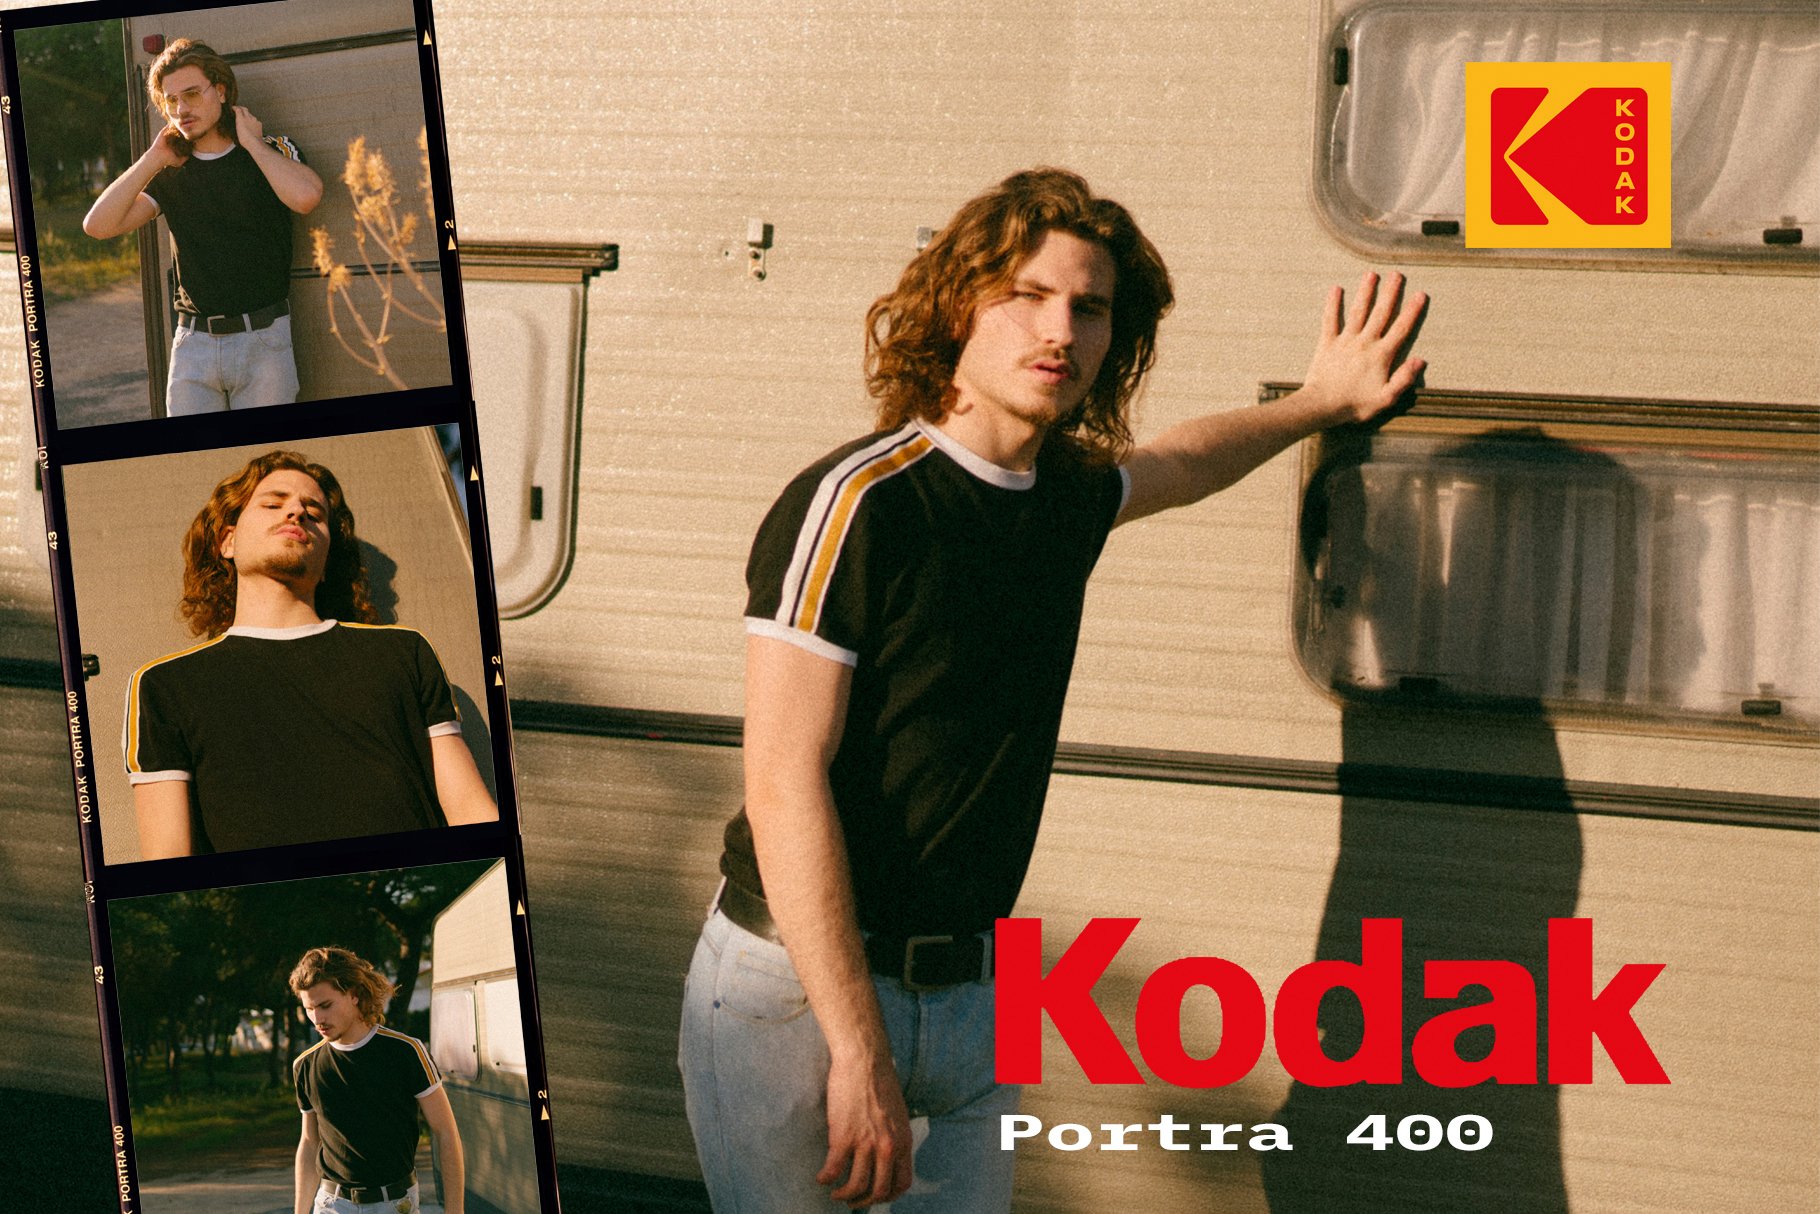 KODAK PORTRA 400 - LIGHTROOM MOBILE PRESET, How To Edit Portra 400 Preset